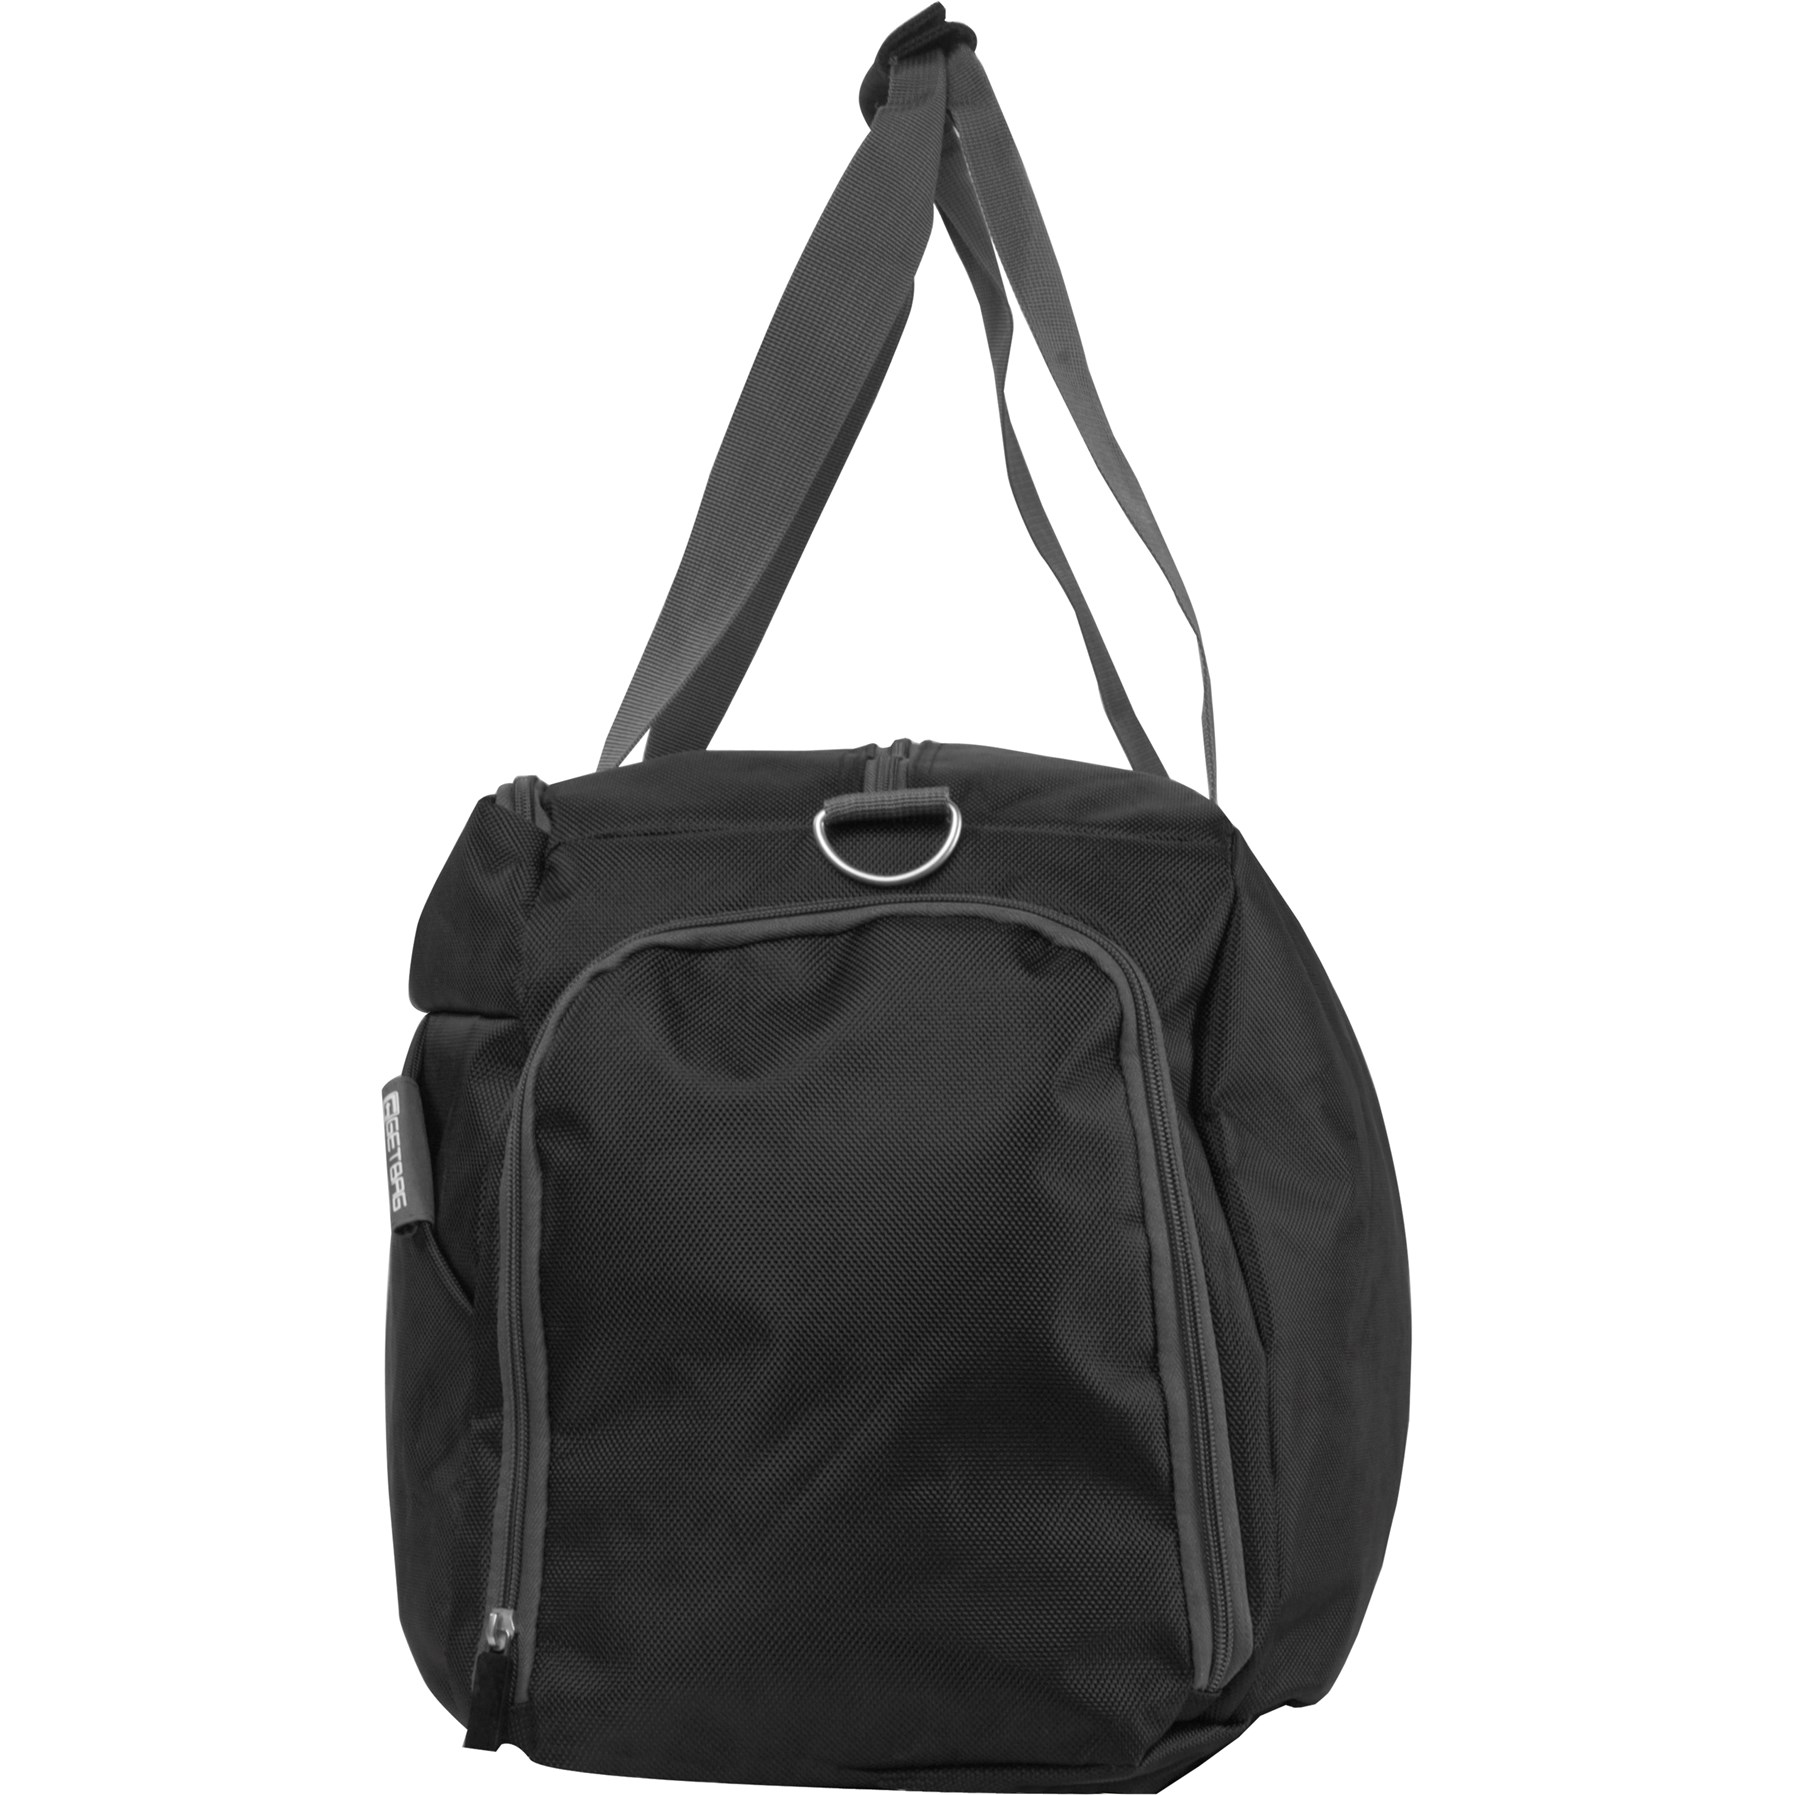 9385 - GETBAG polyester (1680D) sports/travel bag | Impression Europe